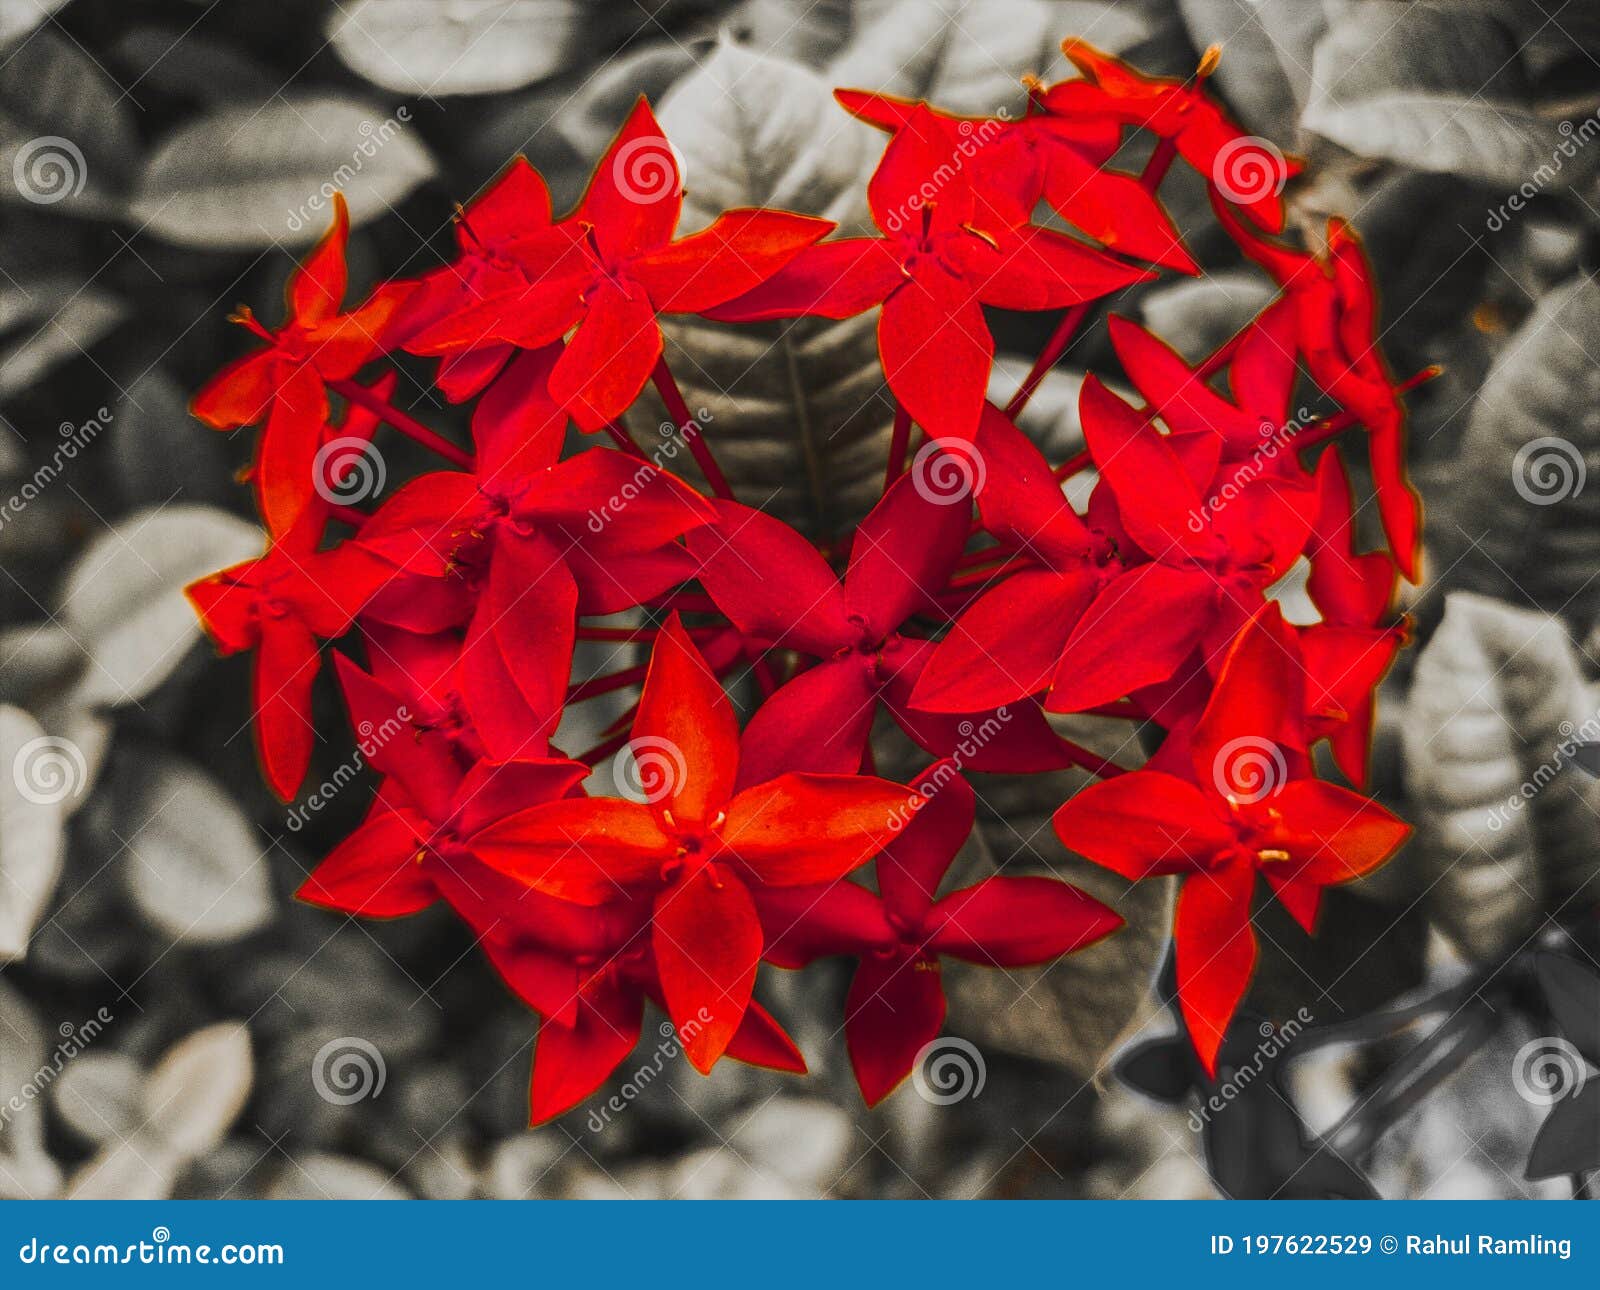 beautiful red flowers macro photograpy